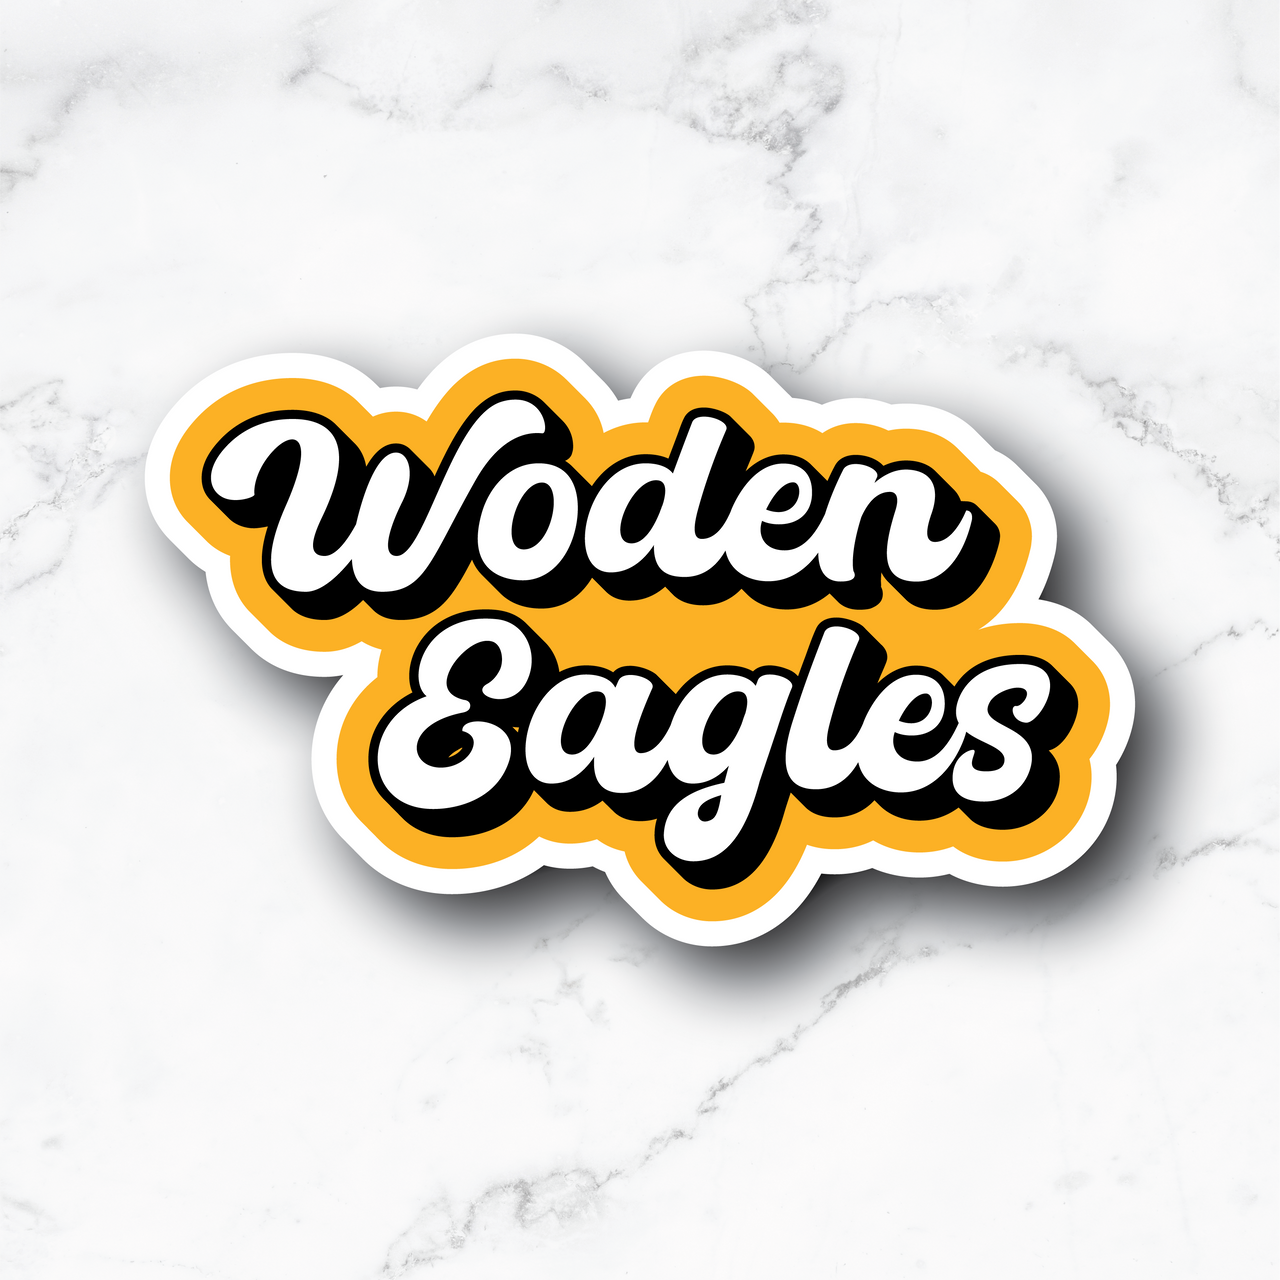 Woden Eagles Cursive Sticker